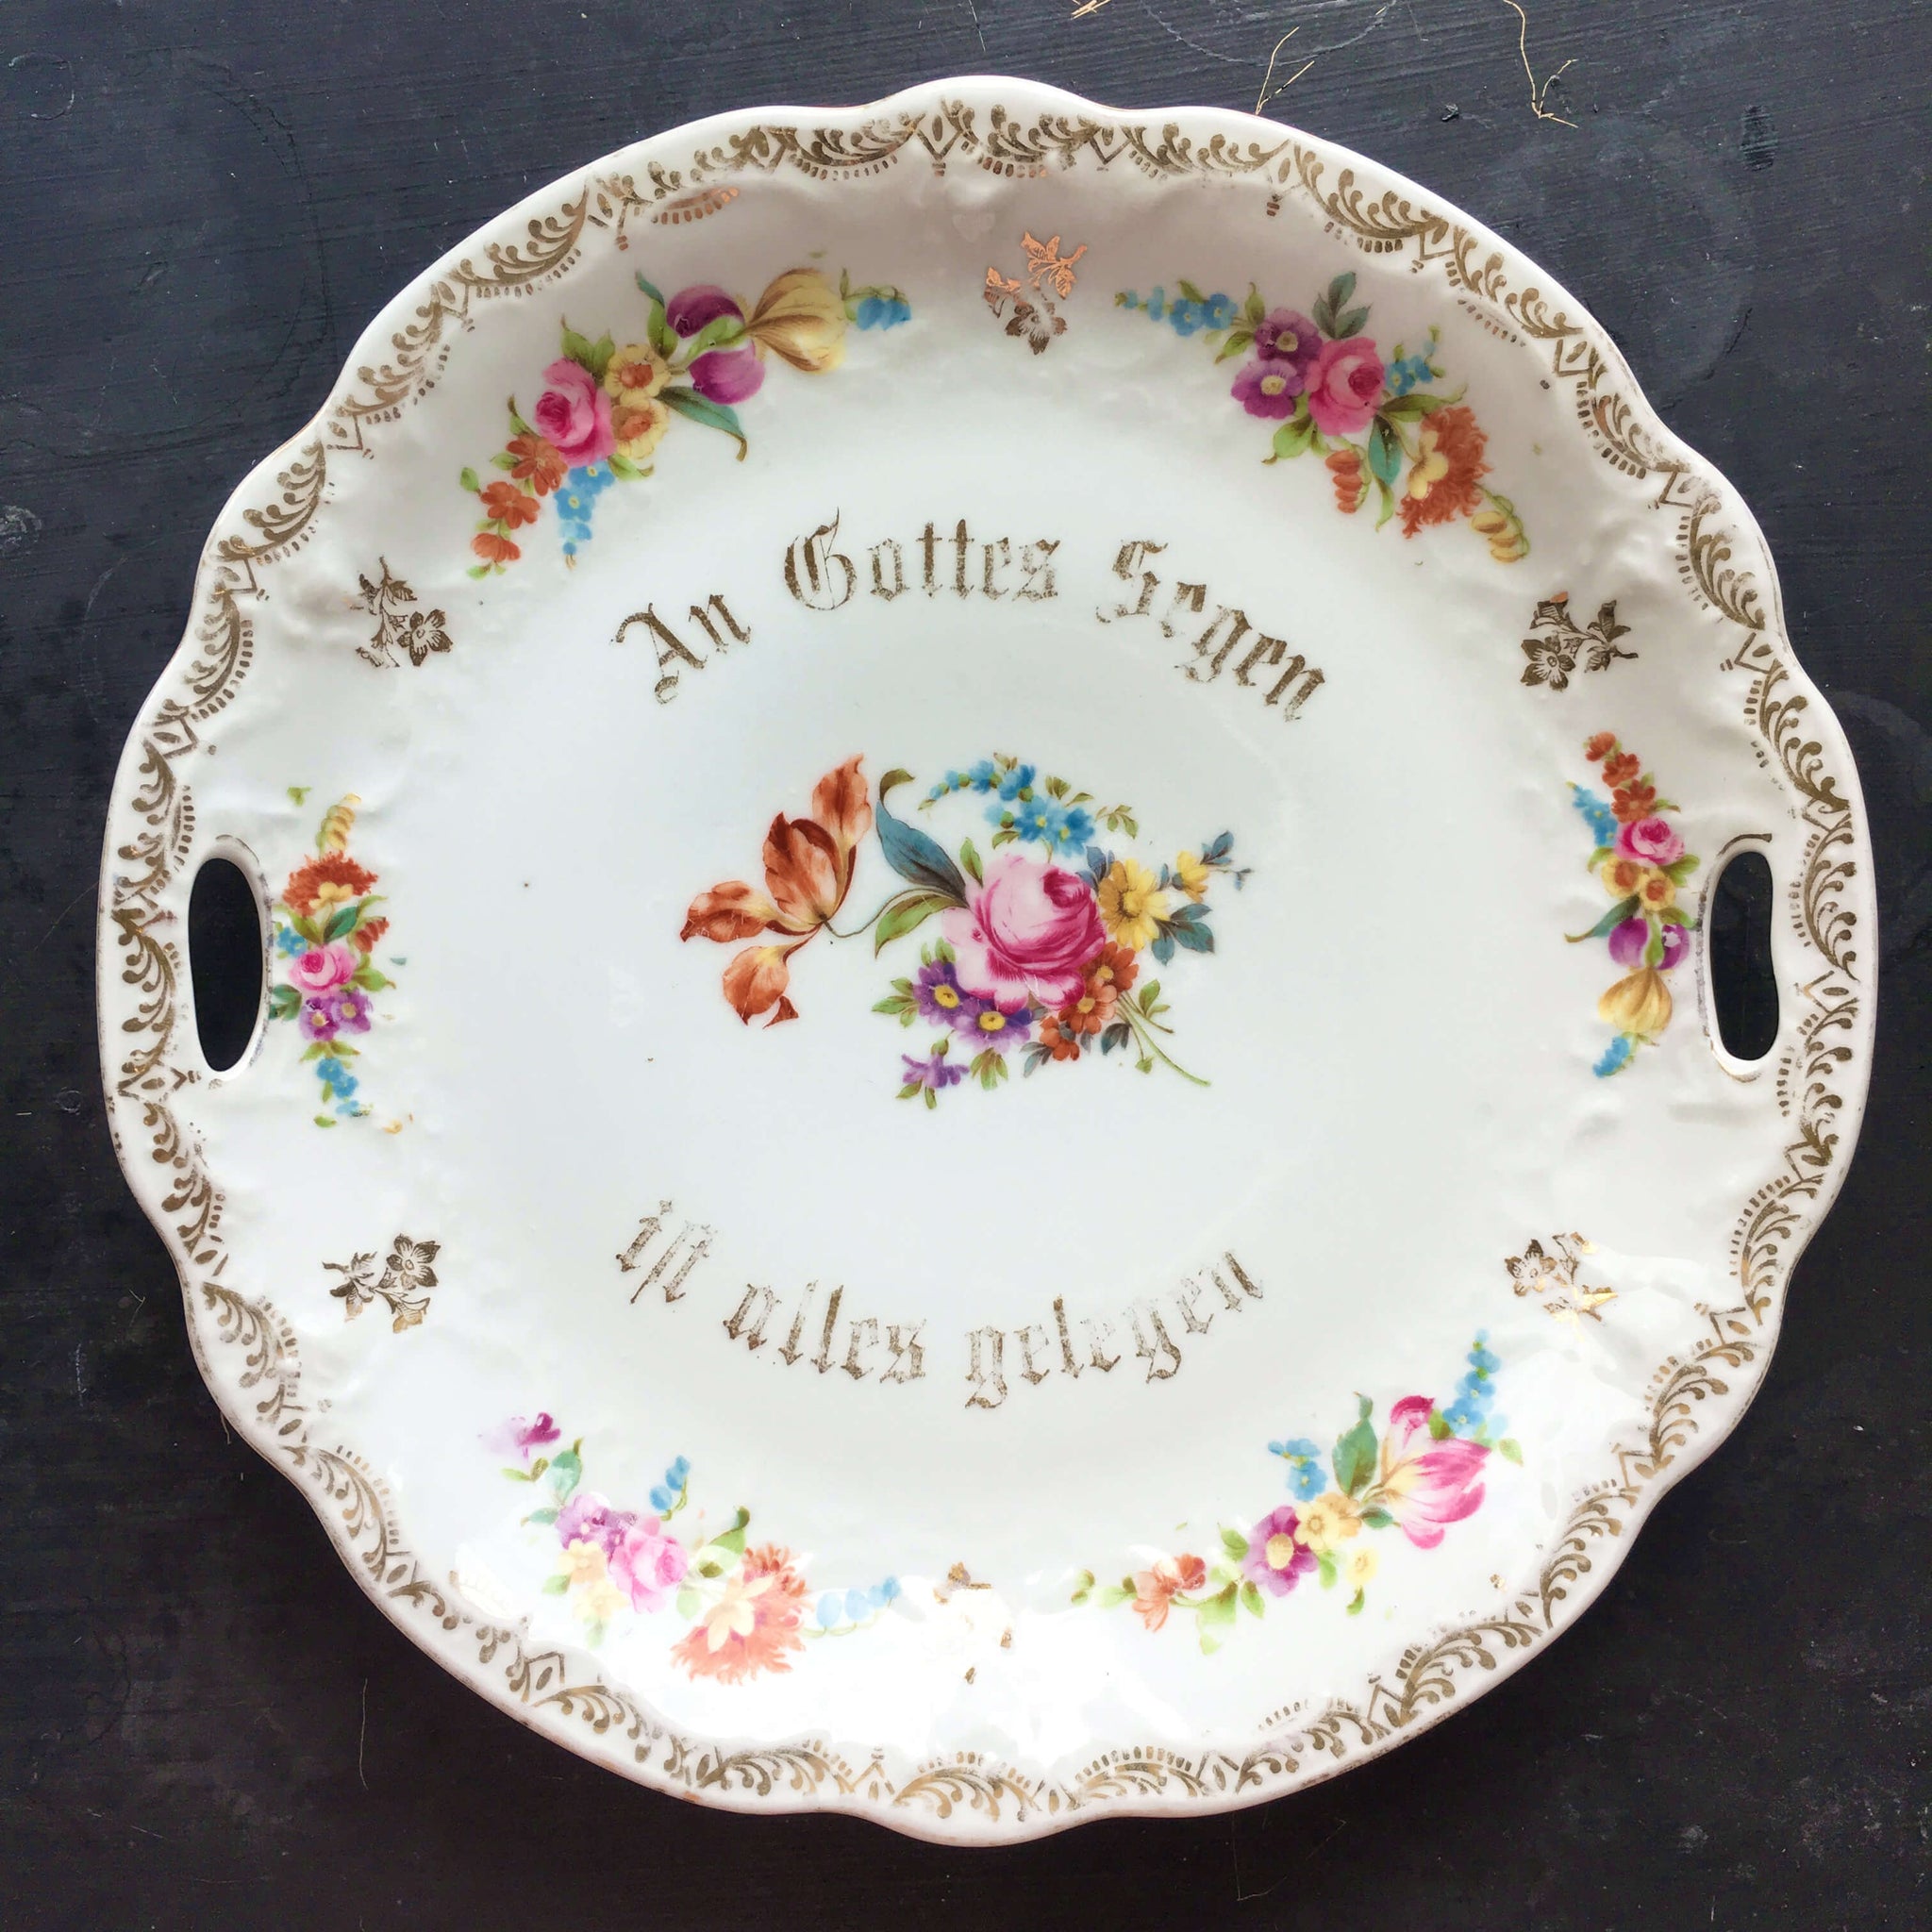 Antique German Blessings Wall Plate - An Gottes Segen - Floral Porcelain